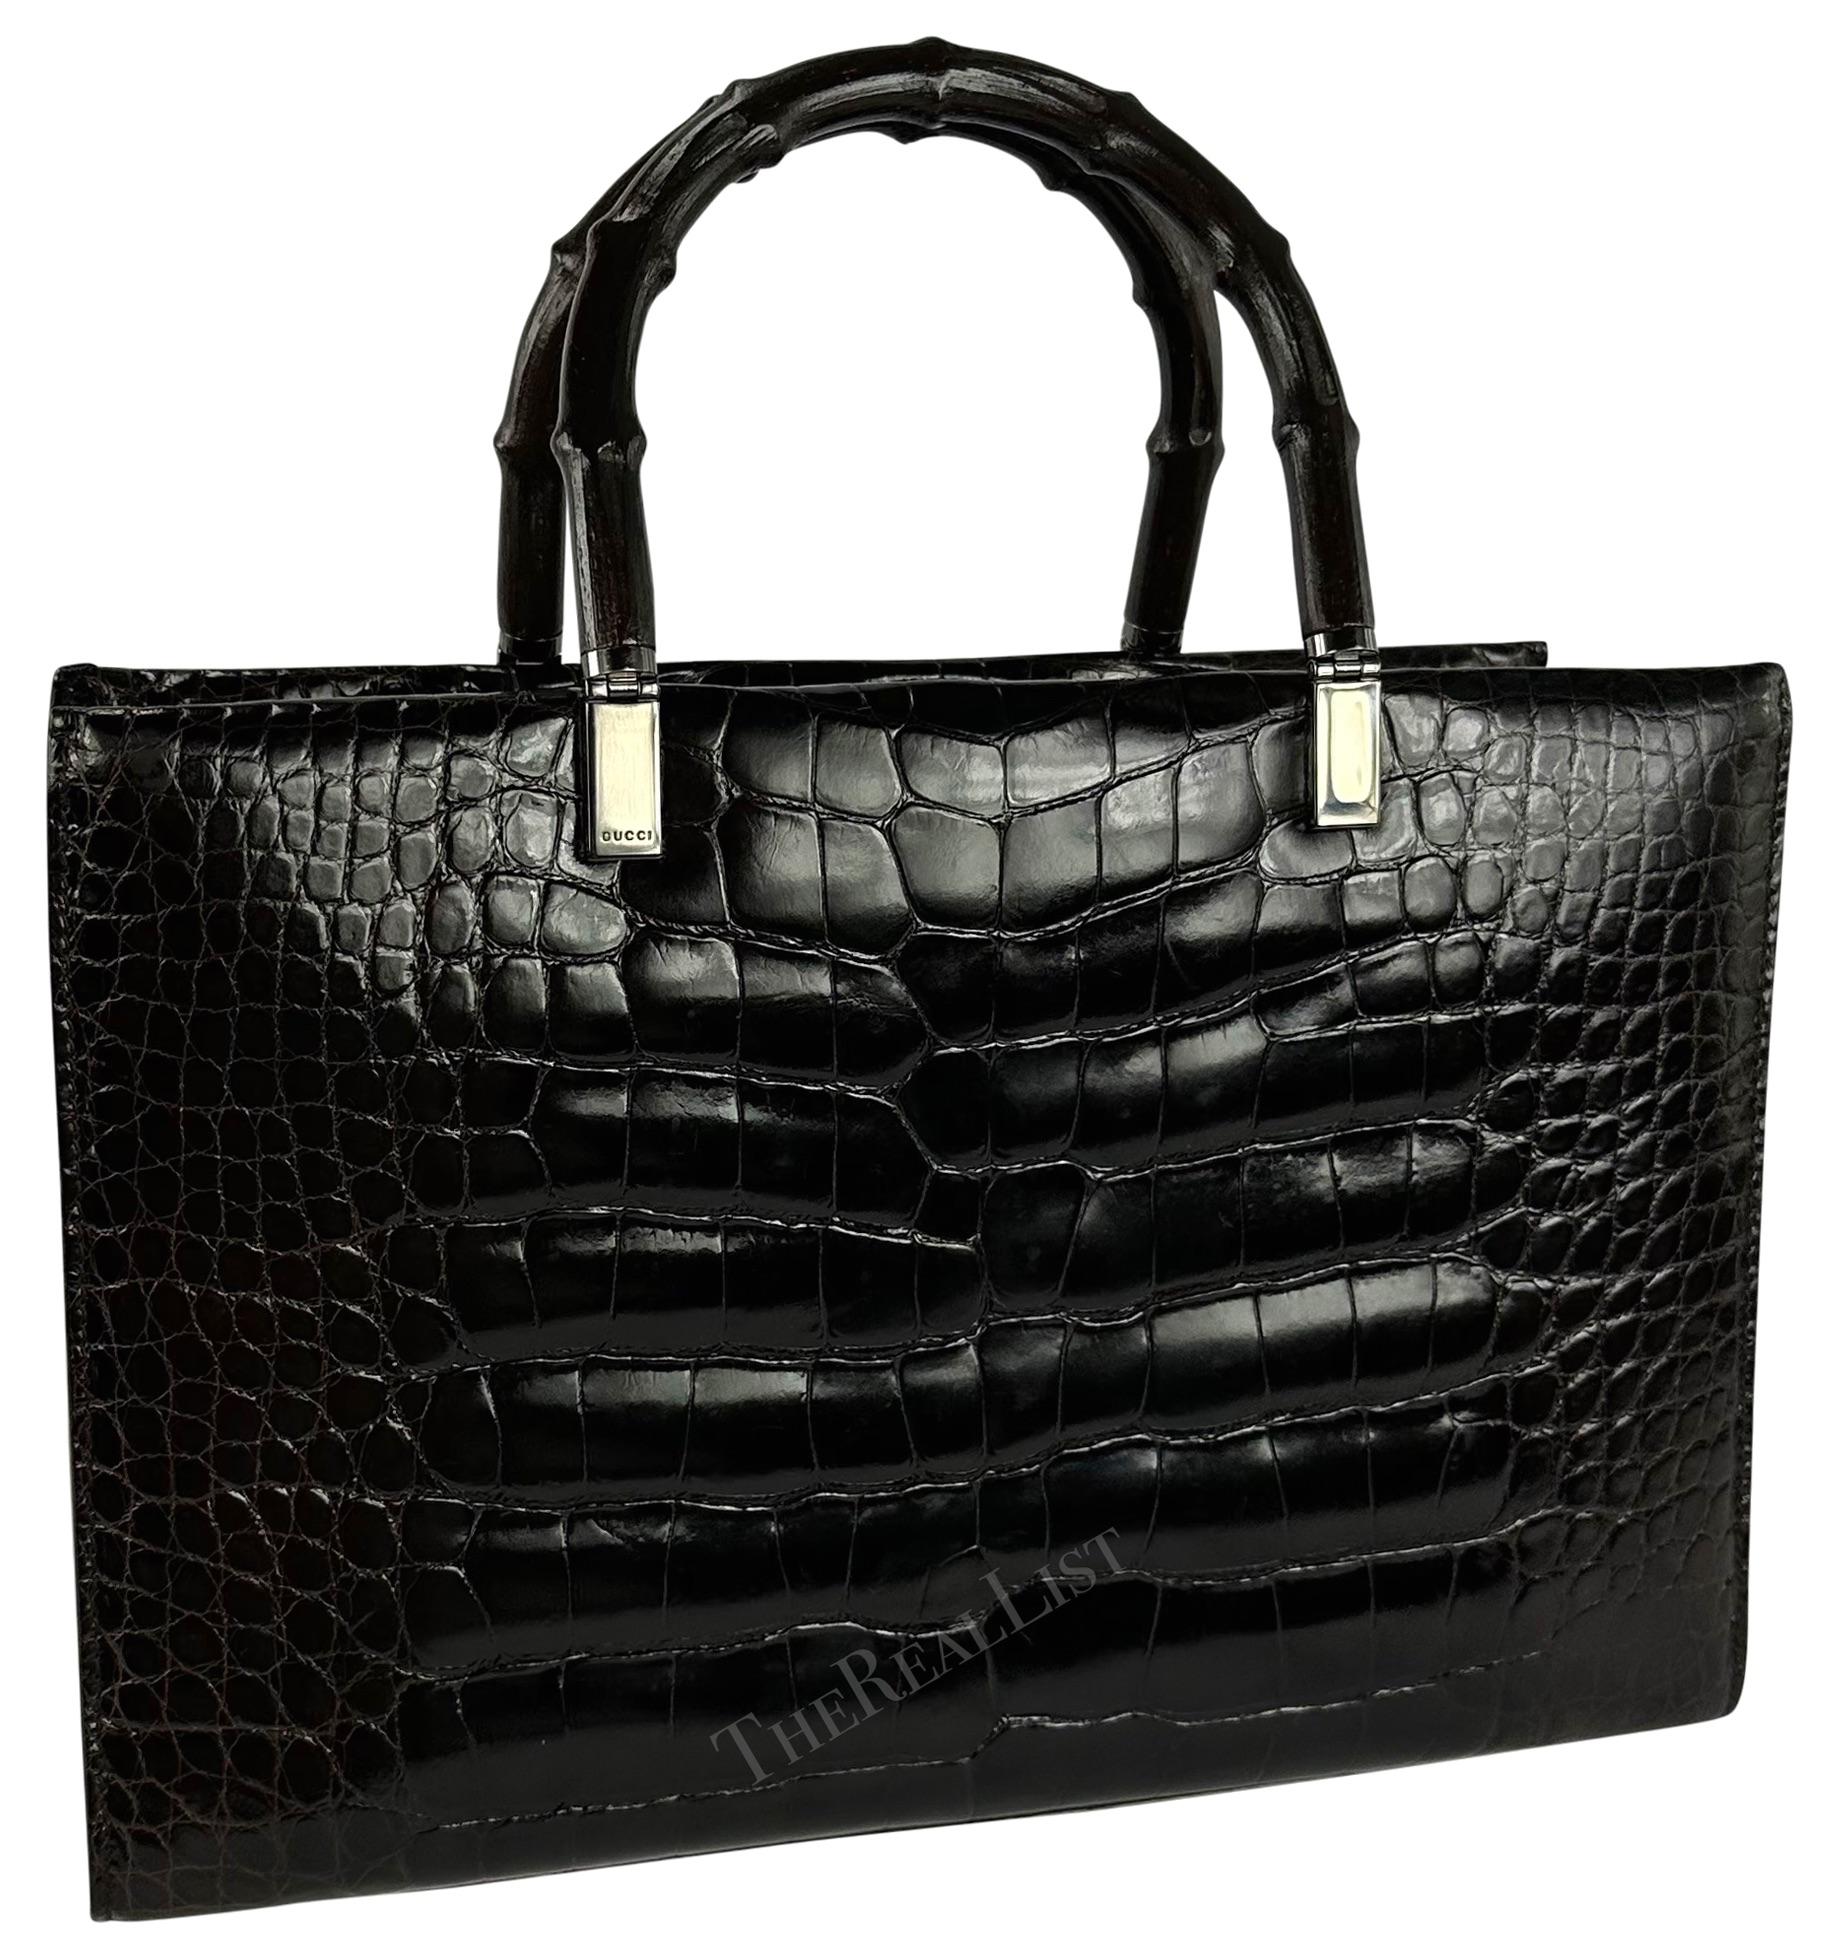 F/W 1998 Gucci by Tom Ford Ad Campaign Black Crocodile Bamboo Tote Bag  For Sale 6